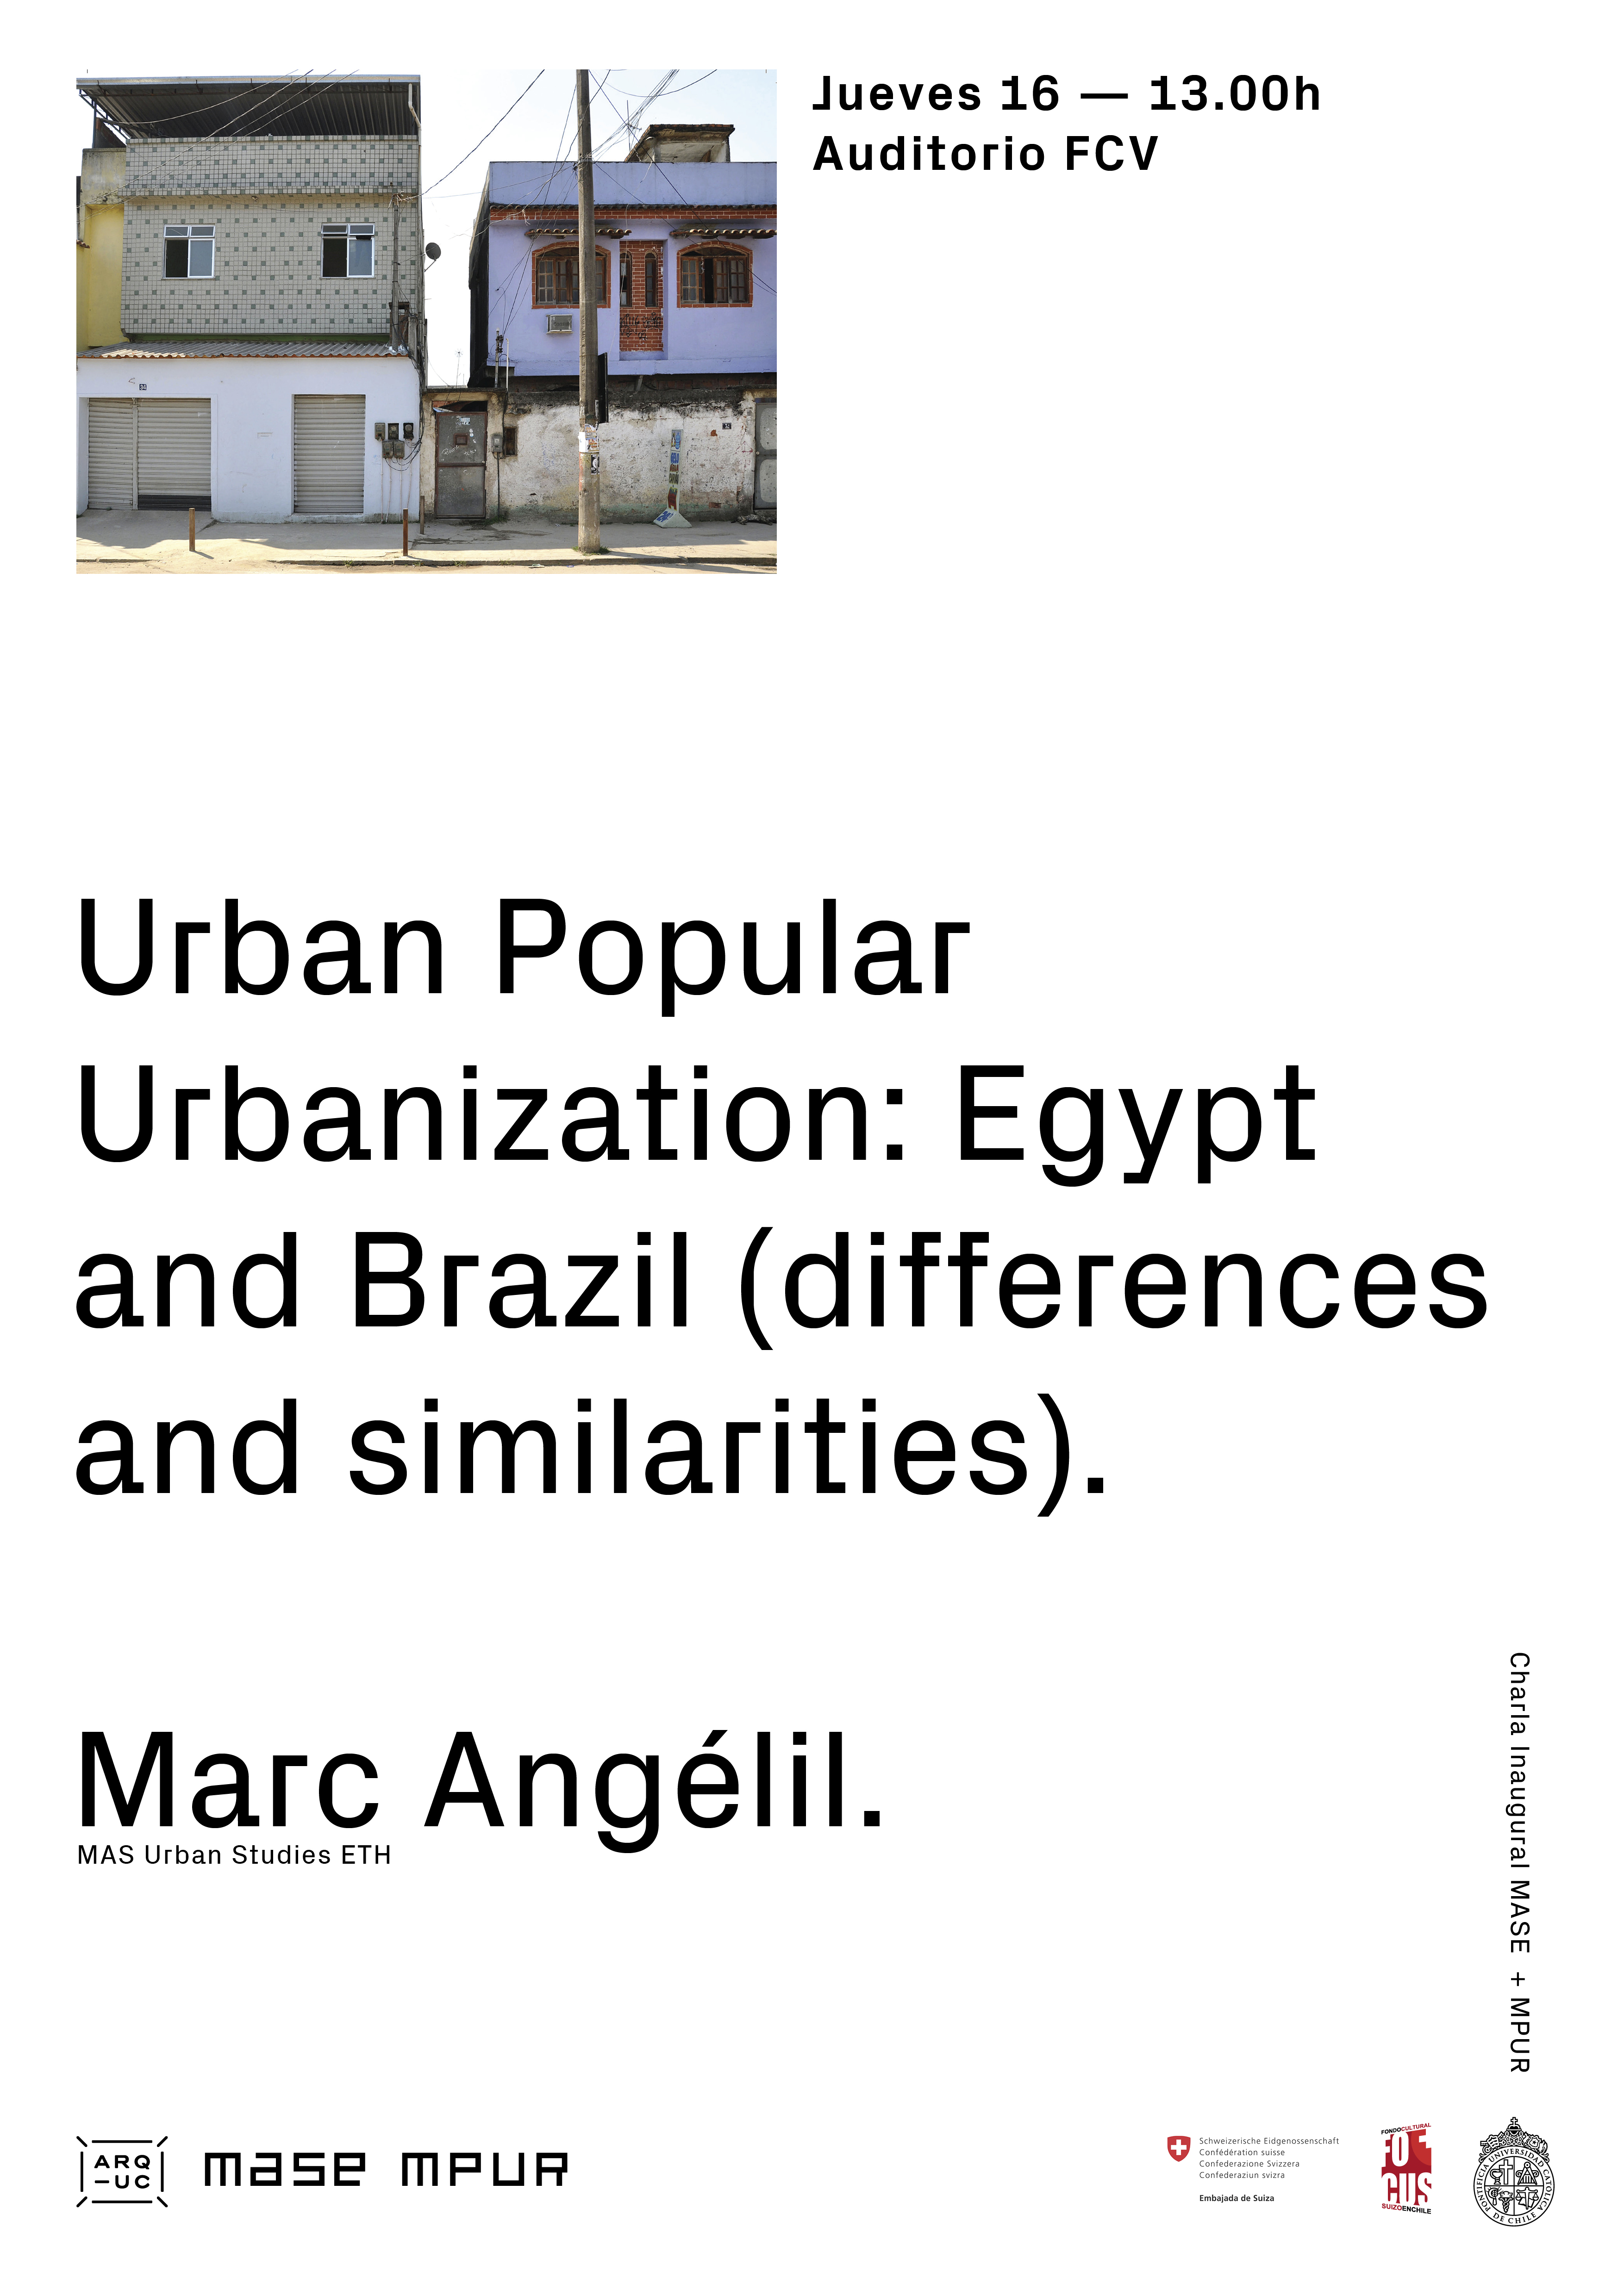 ARQUC_MAS Urban Studies_Marc Angelil